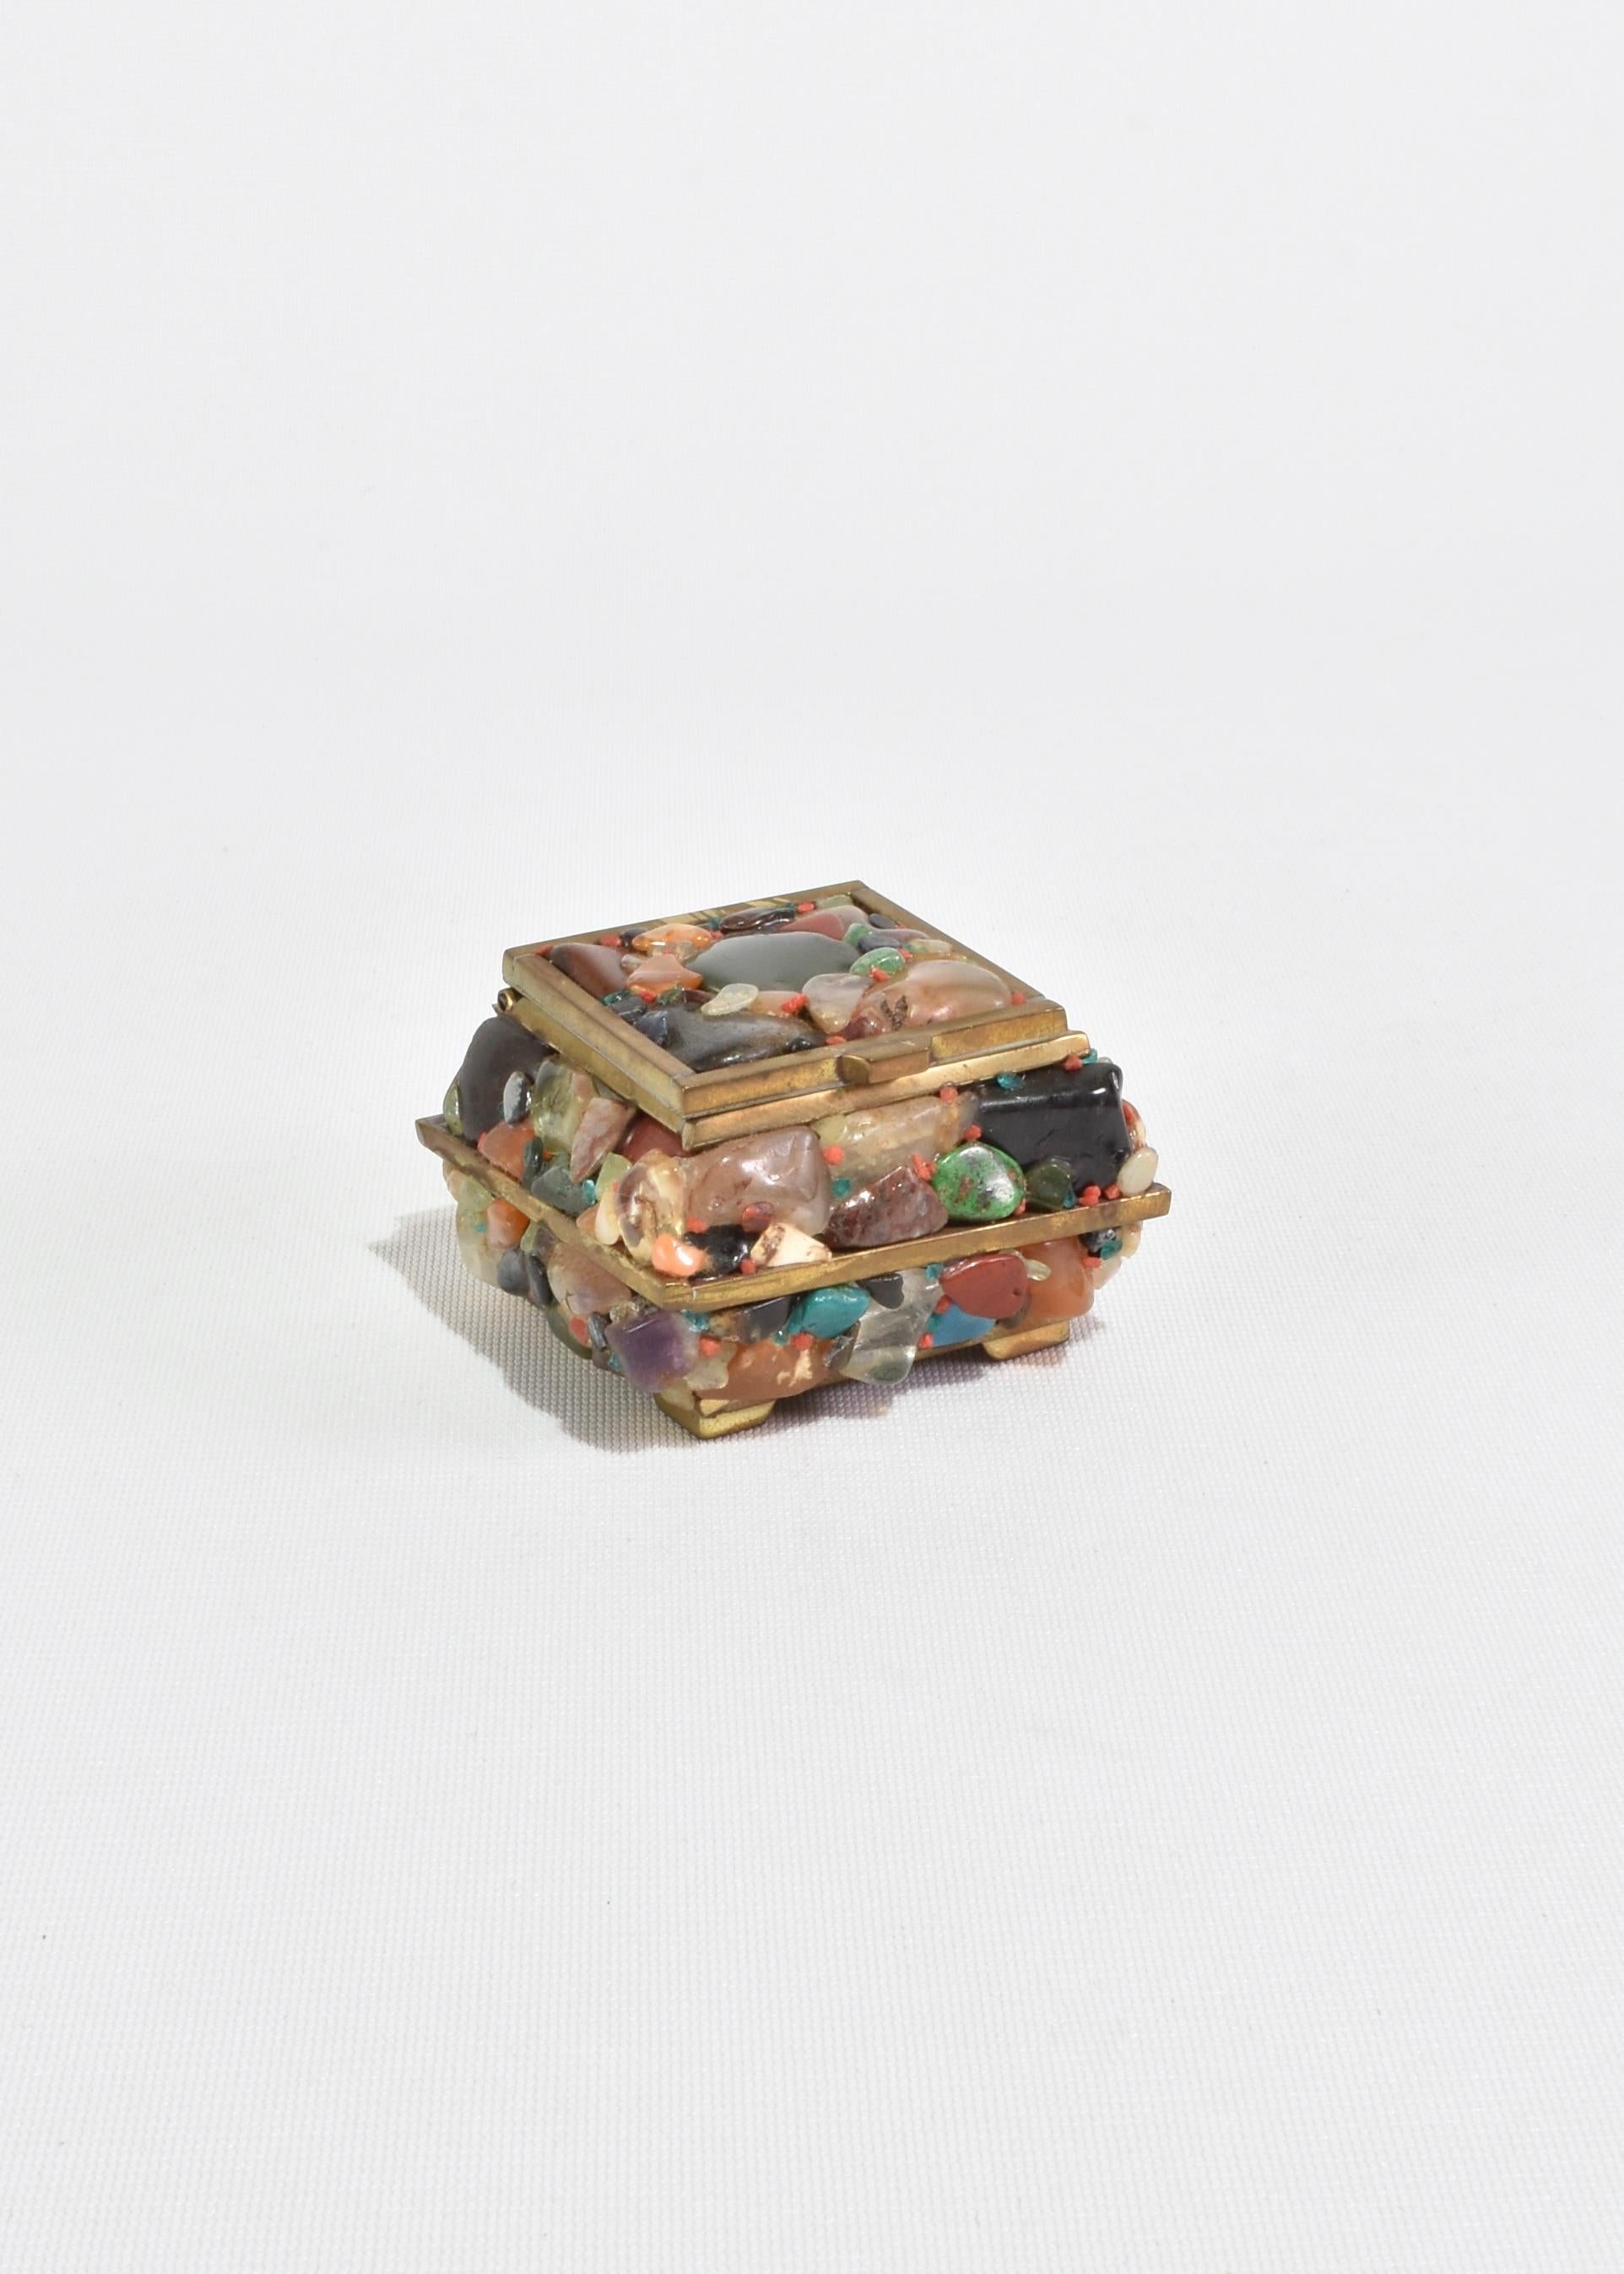 Hand-Crafted Mosaic Stone Jewelry Box